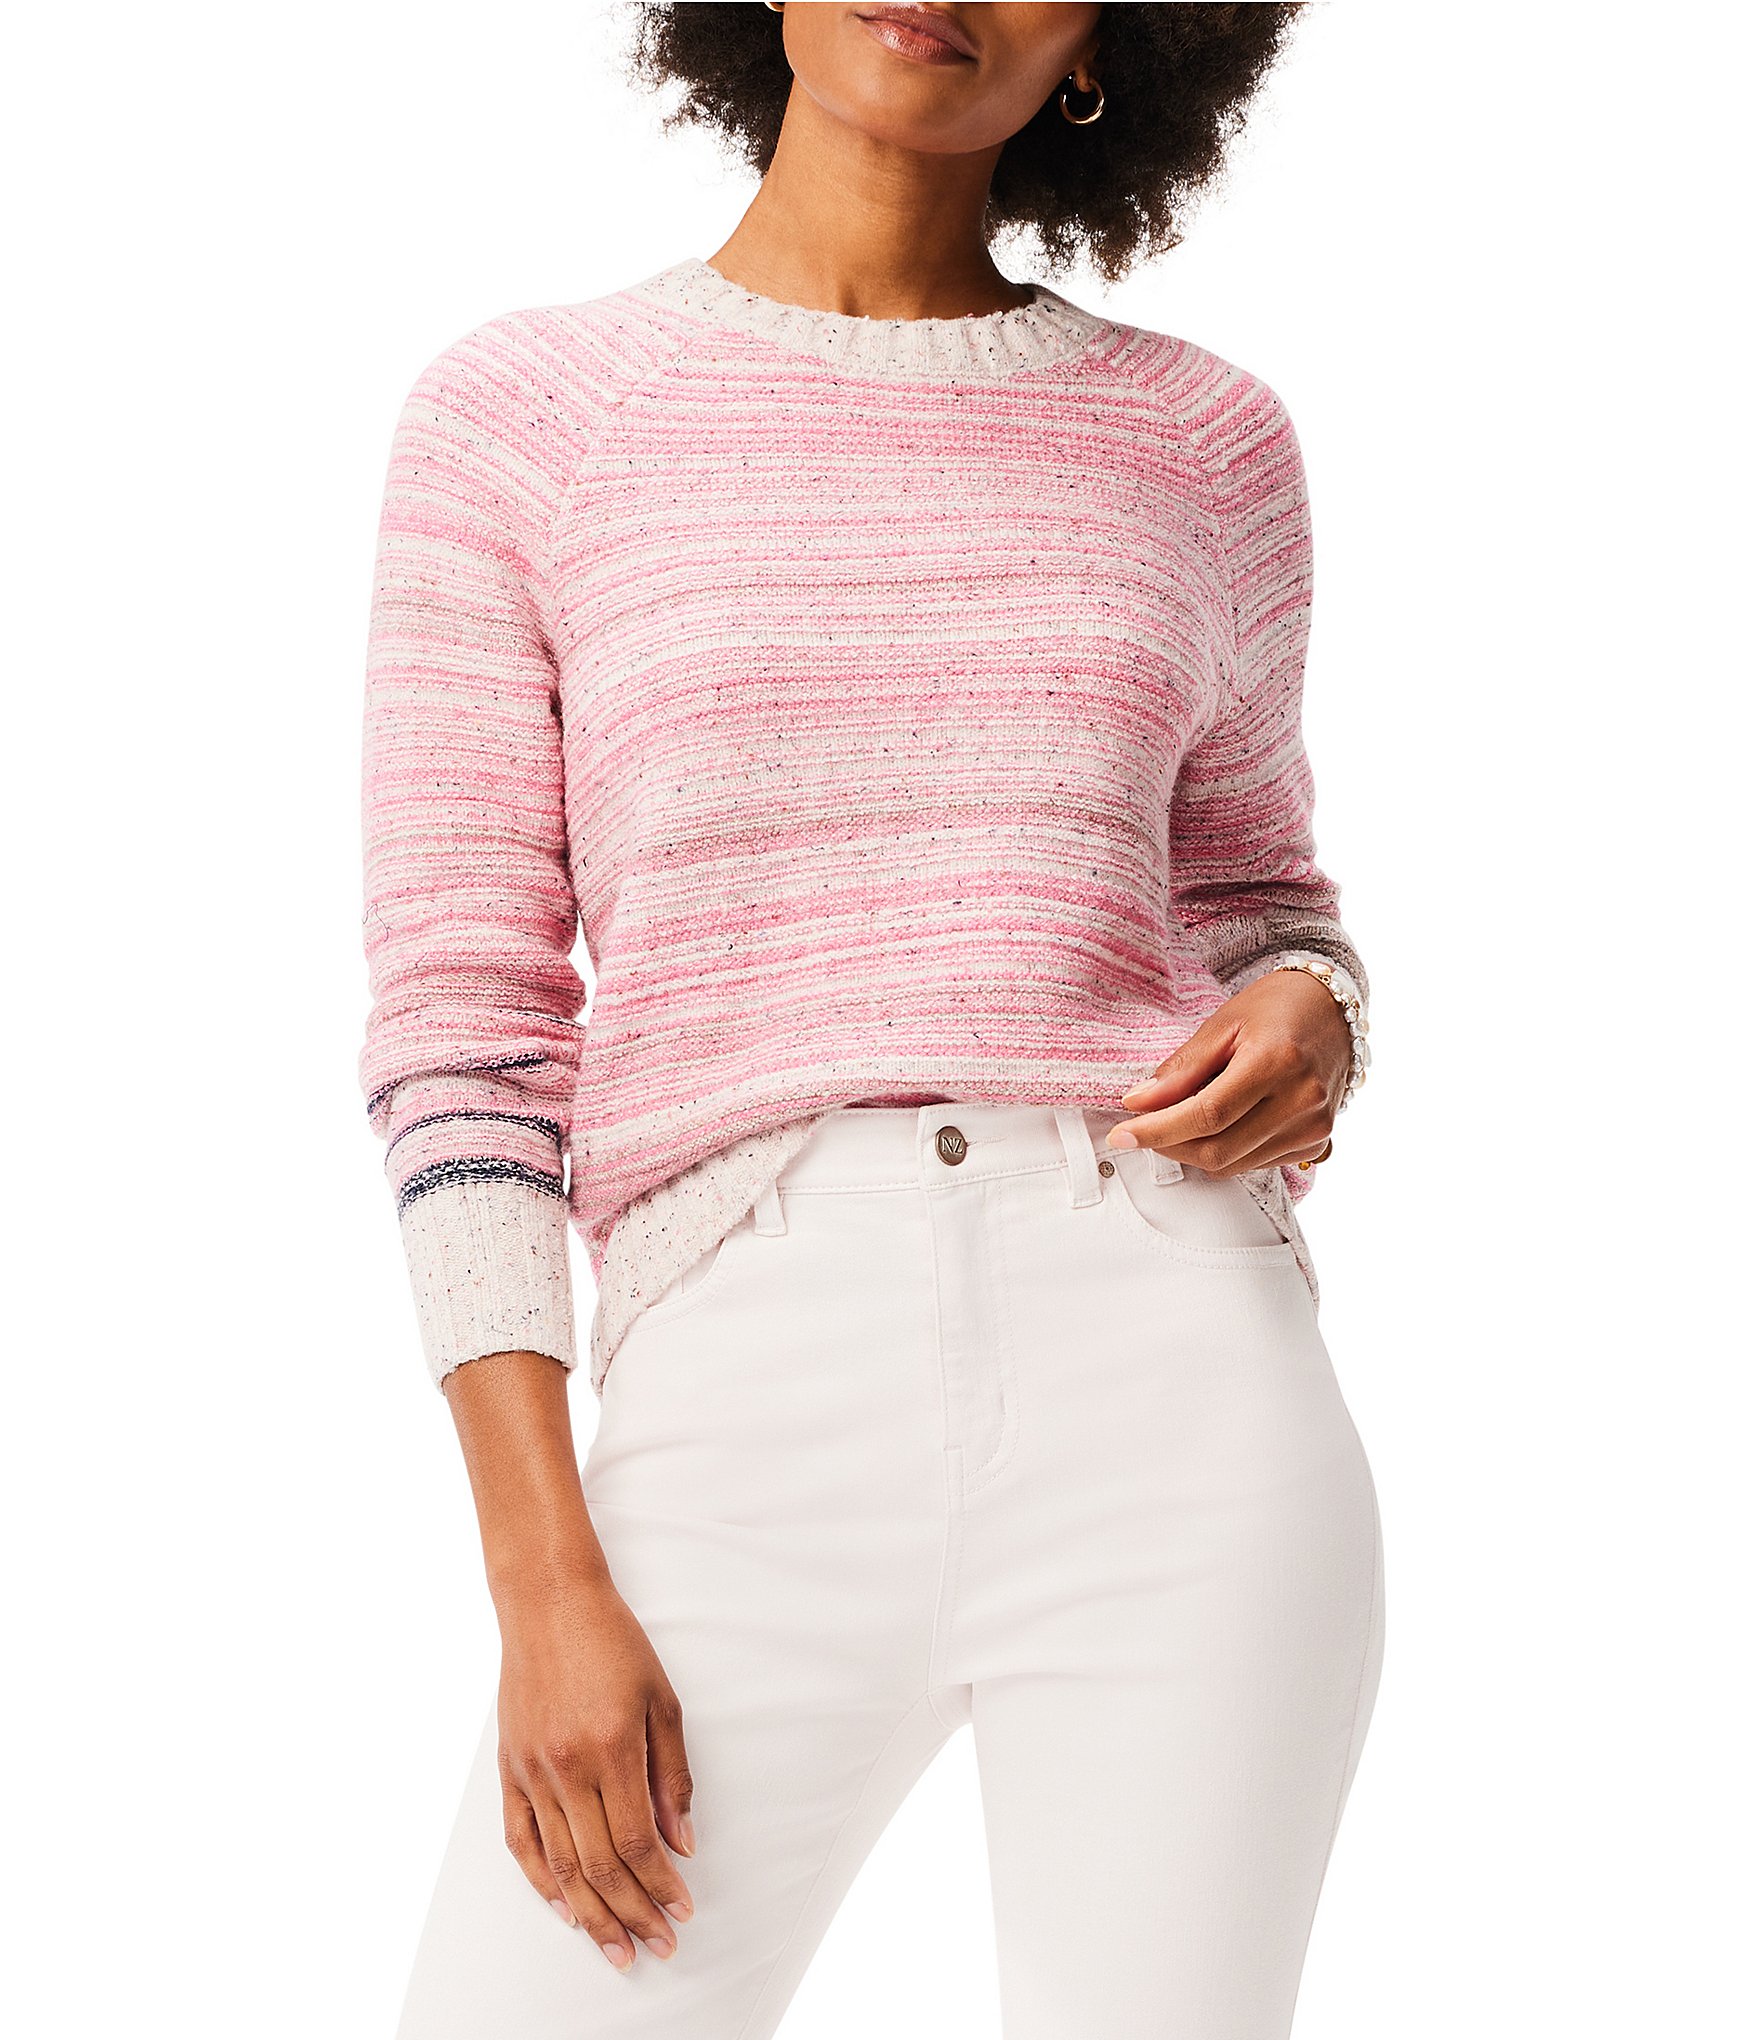 Nic + Zoe Placed Crochet Sweater Tee - Sofia's Boutique, Inc